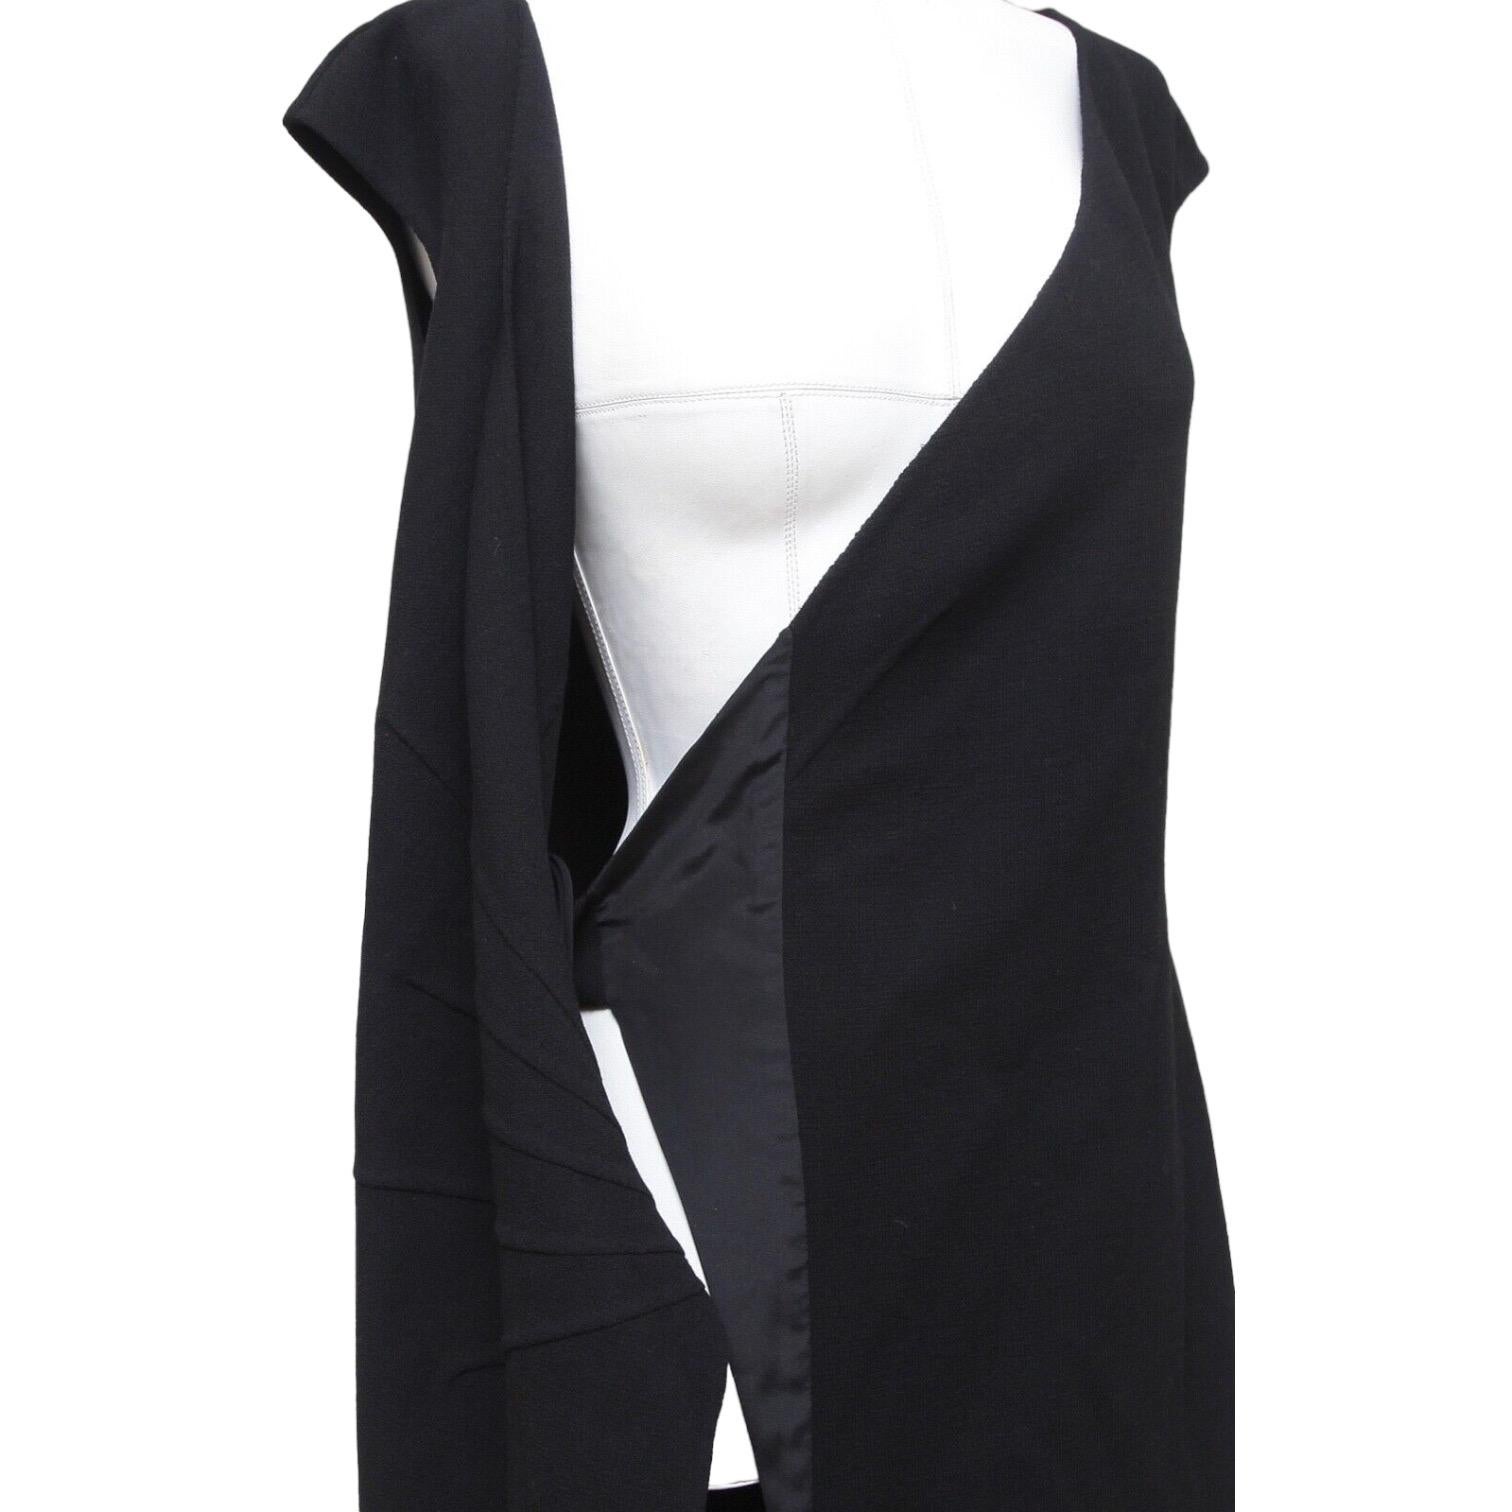 OSCAR DE LA RENTA Dress Black Sleeveless Wrap Knit Sz 8 NWT $2190 For Sale 2